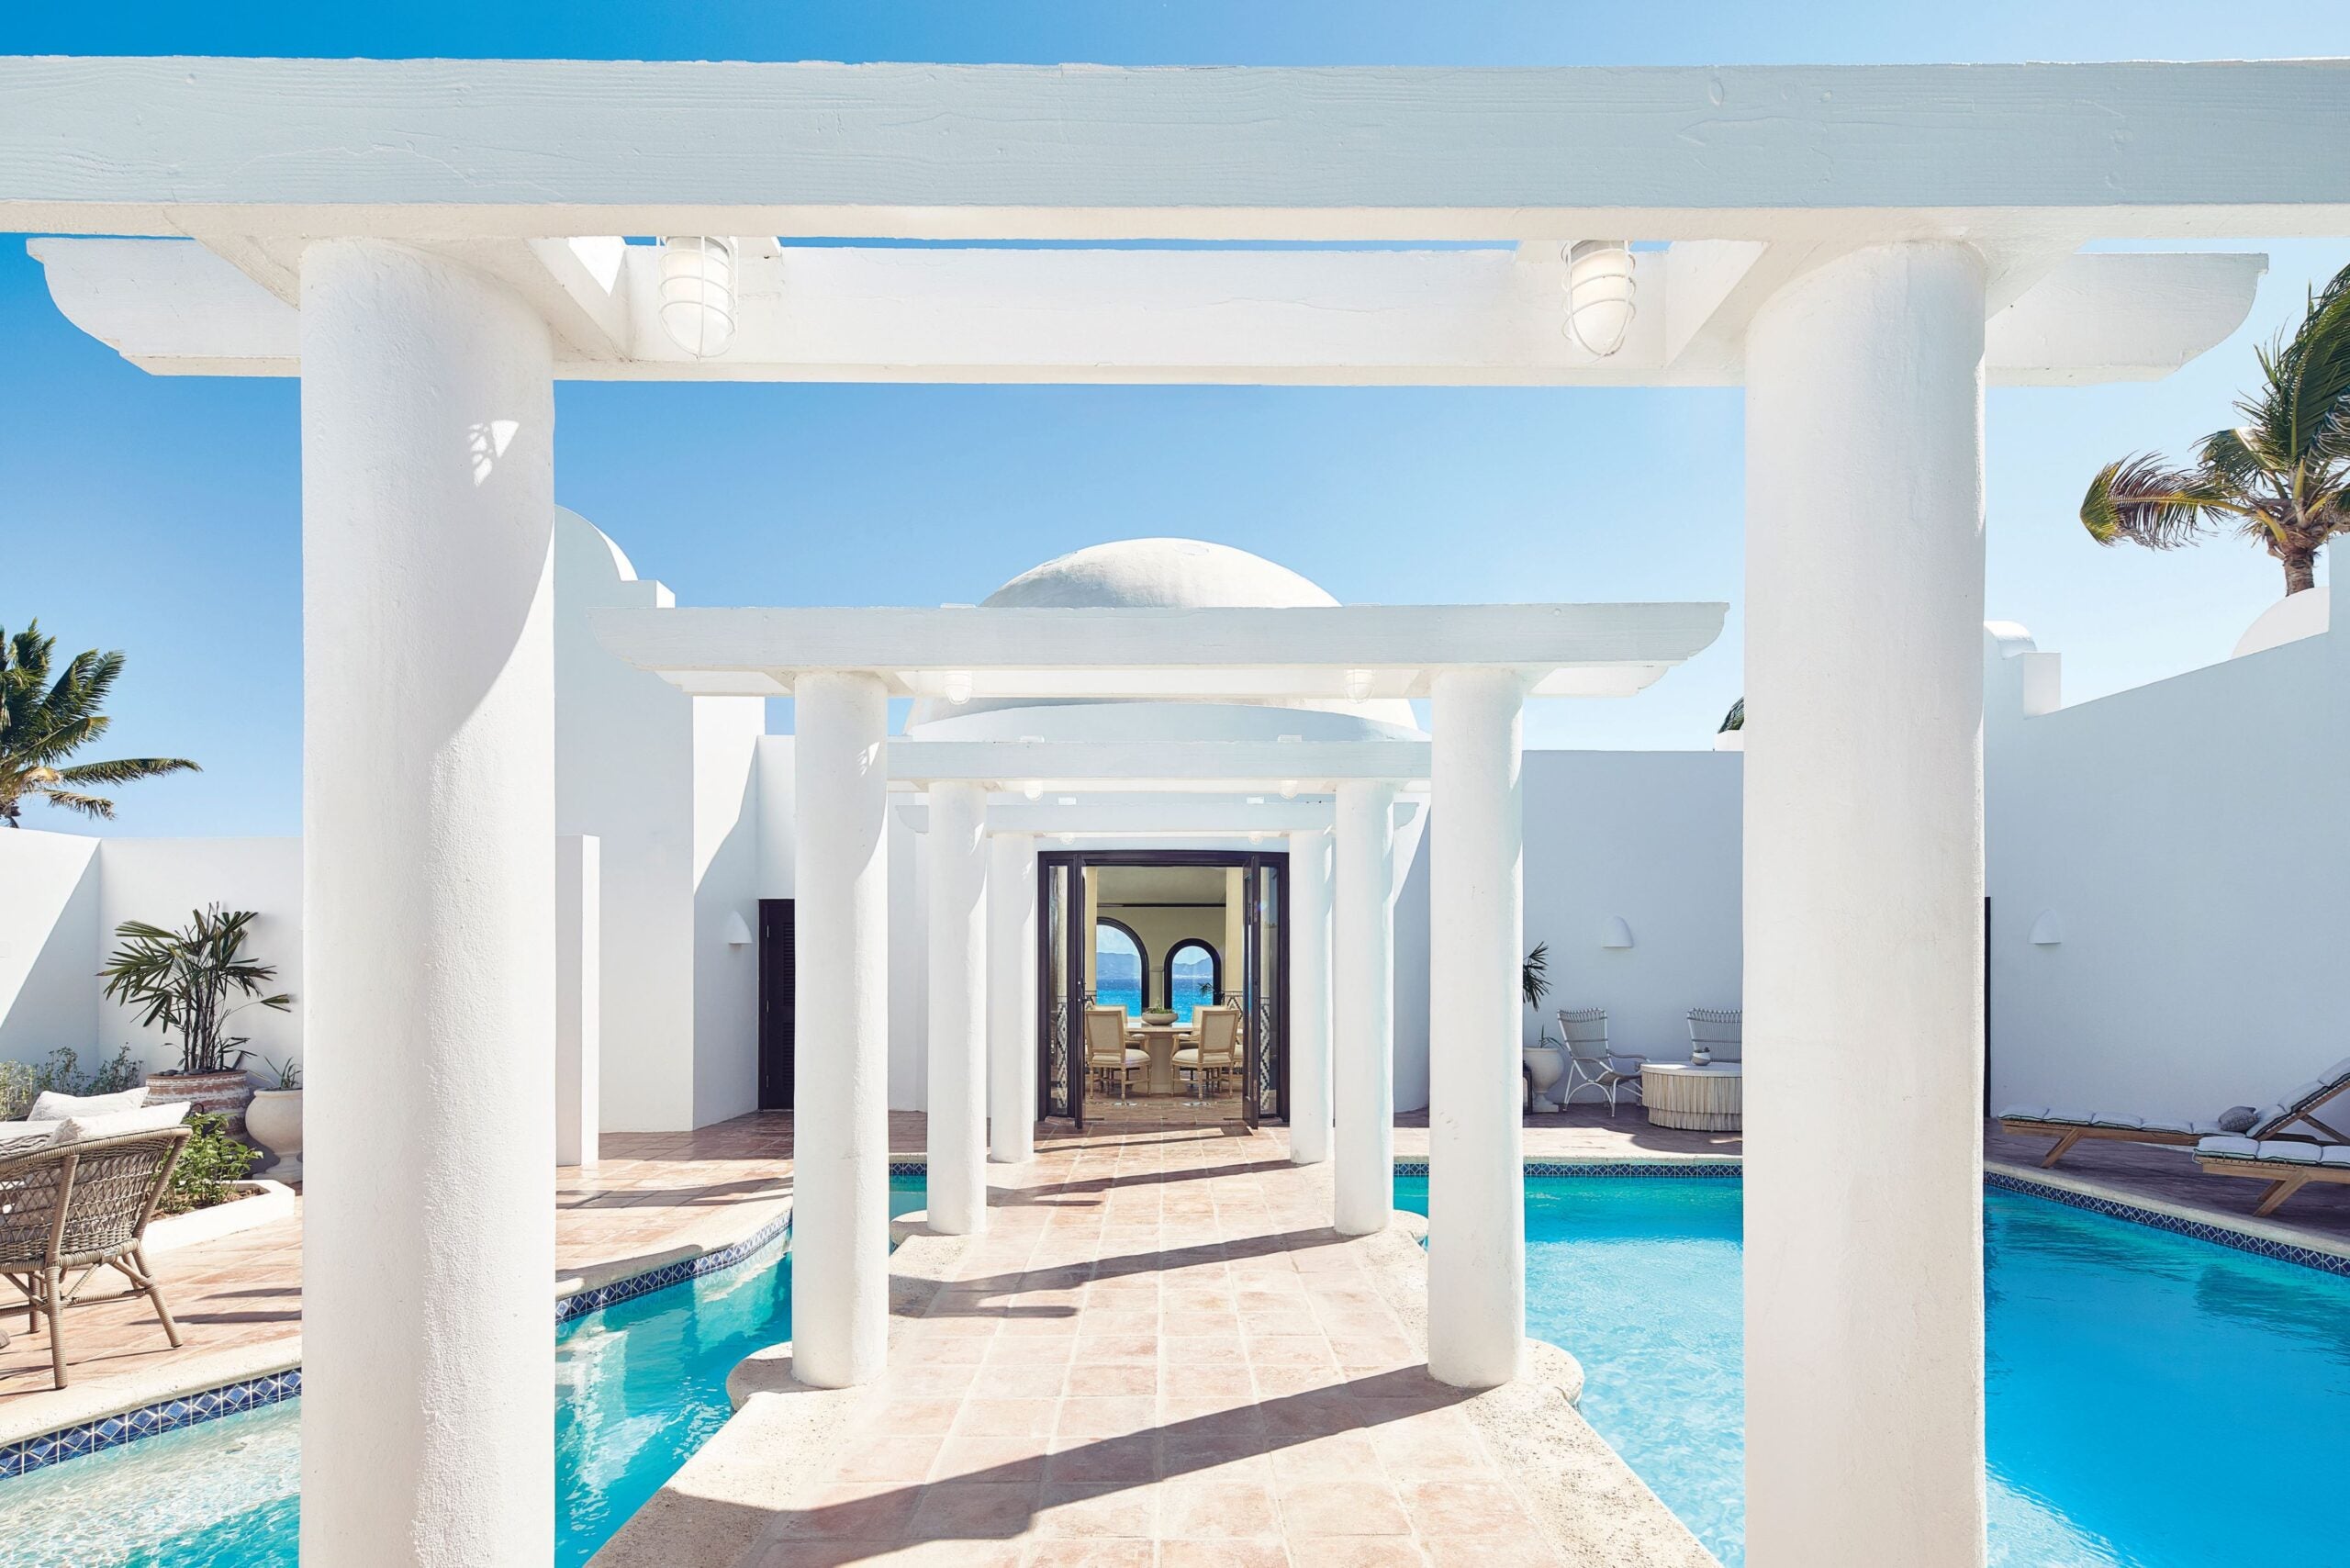 Belmond hotel pool luxury experience